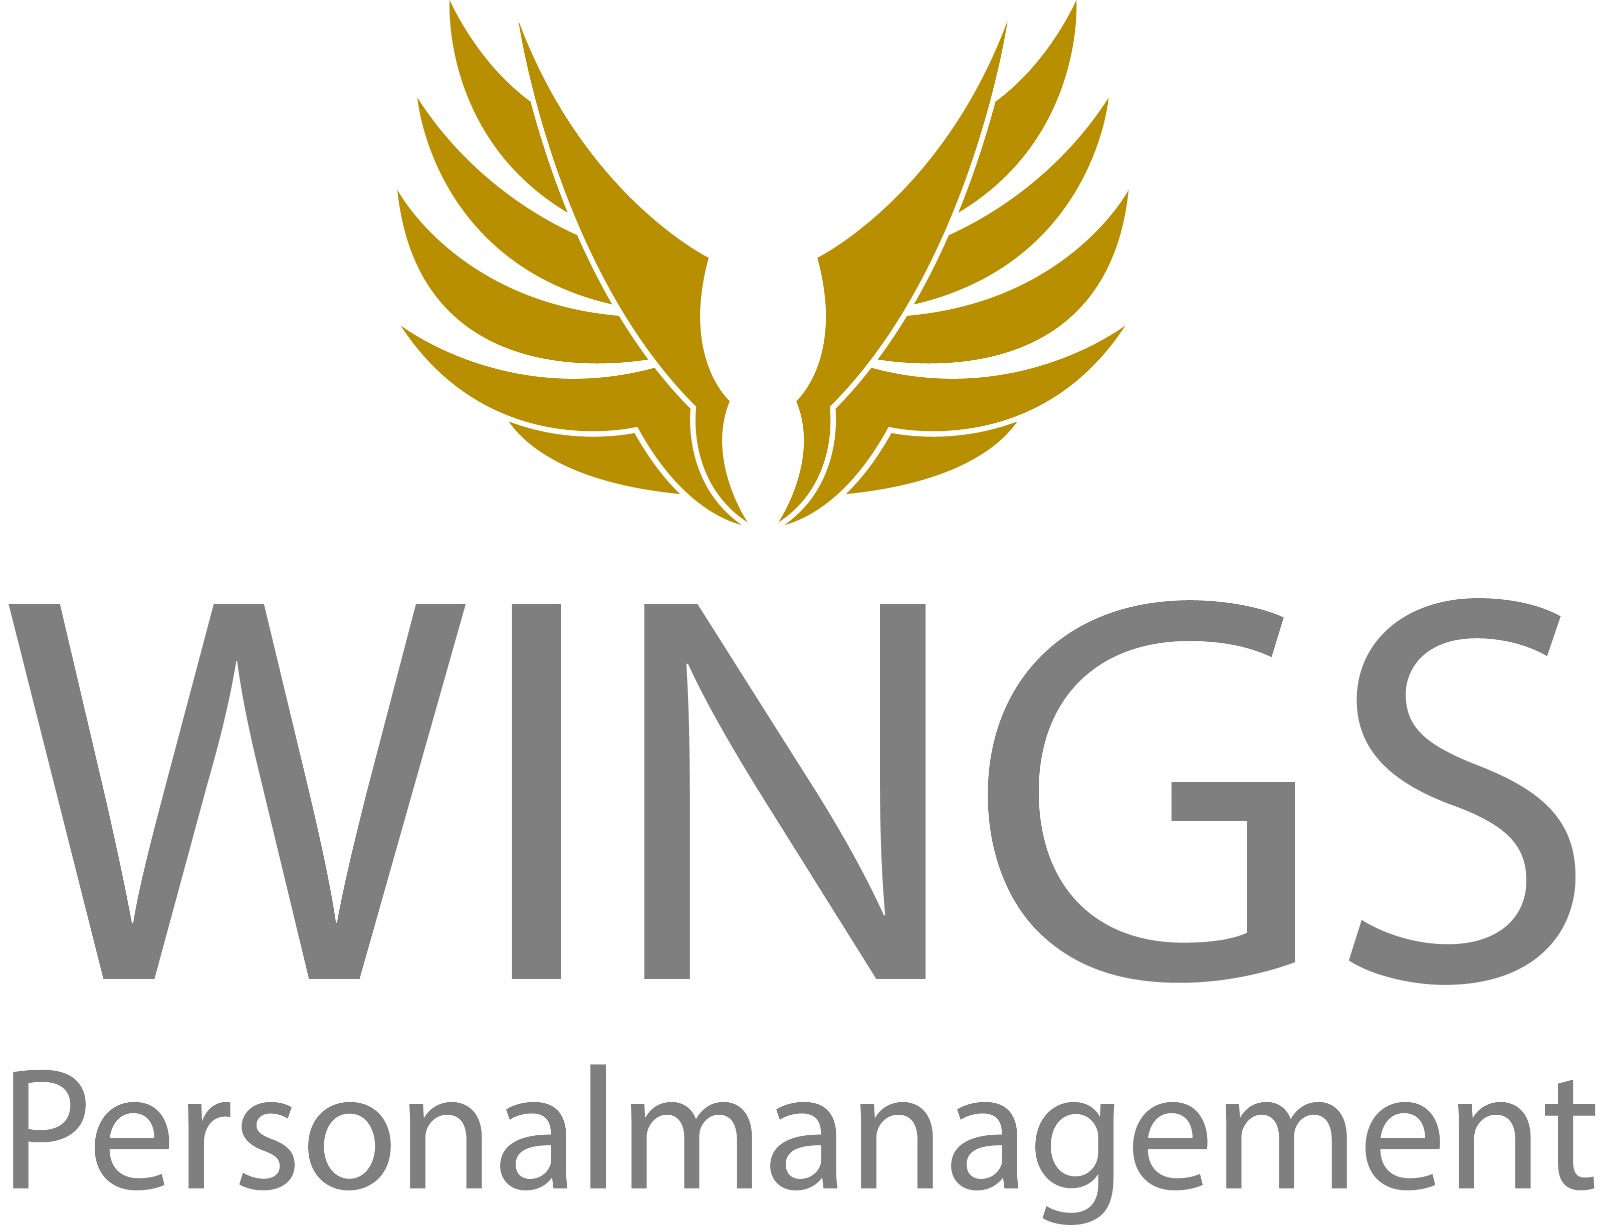 WINGS Personalmanagement im Raum Siegen logo